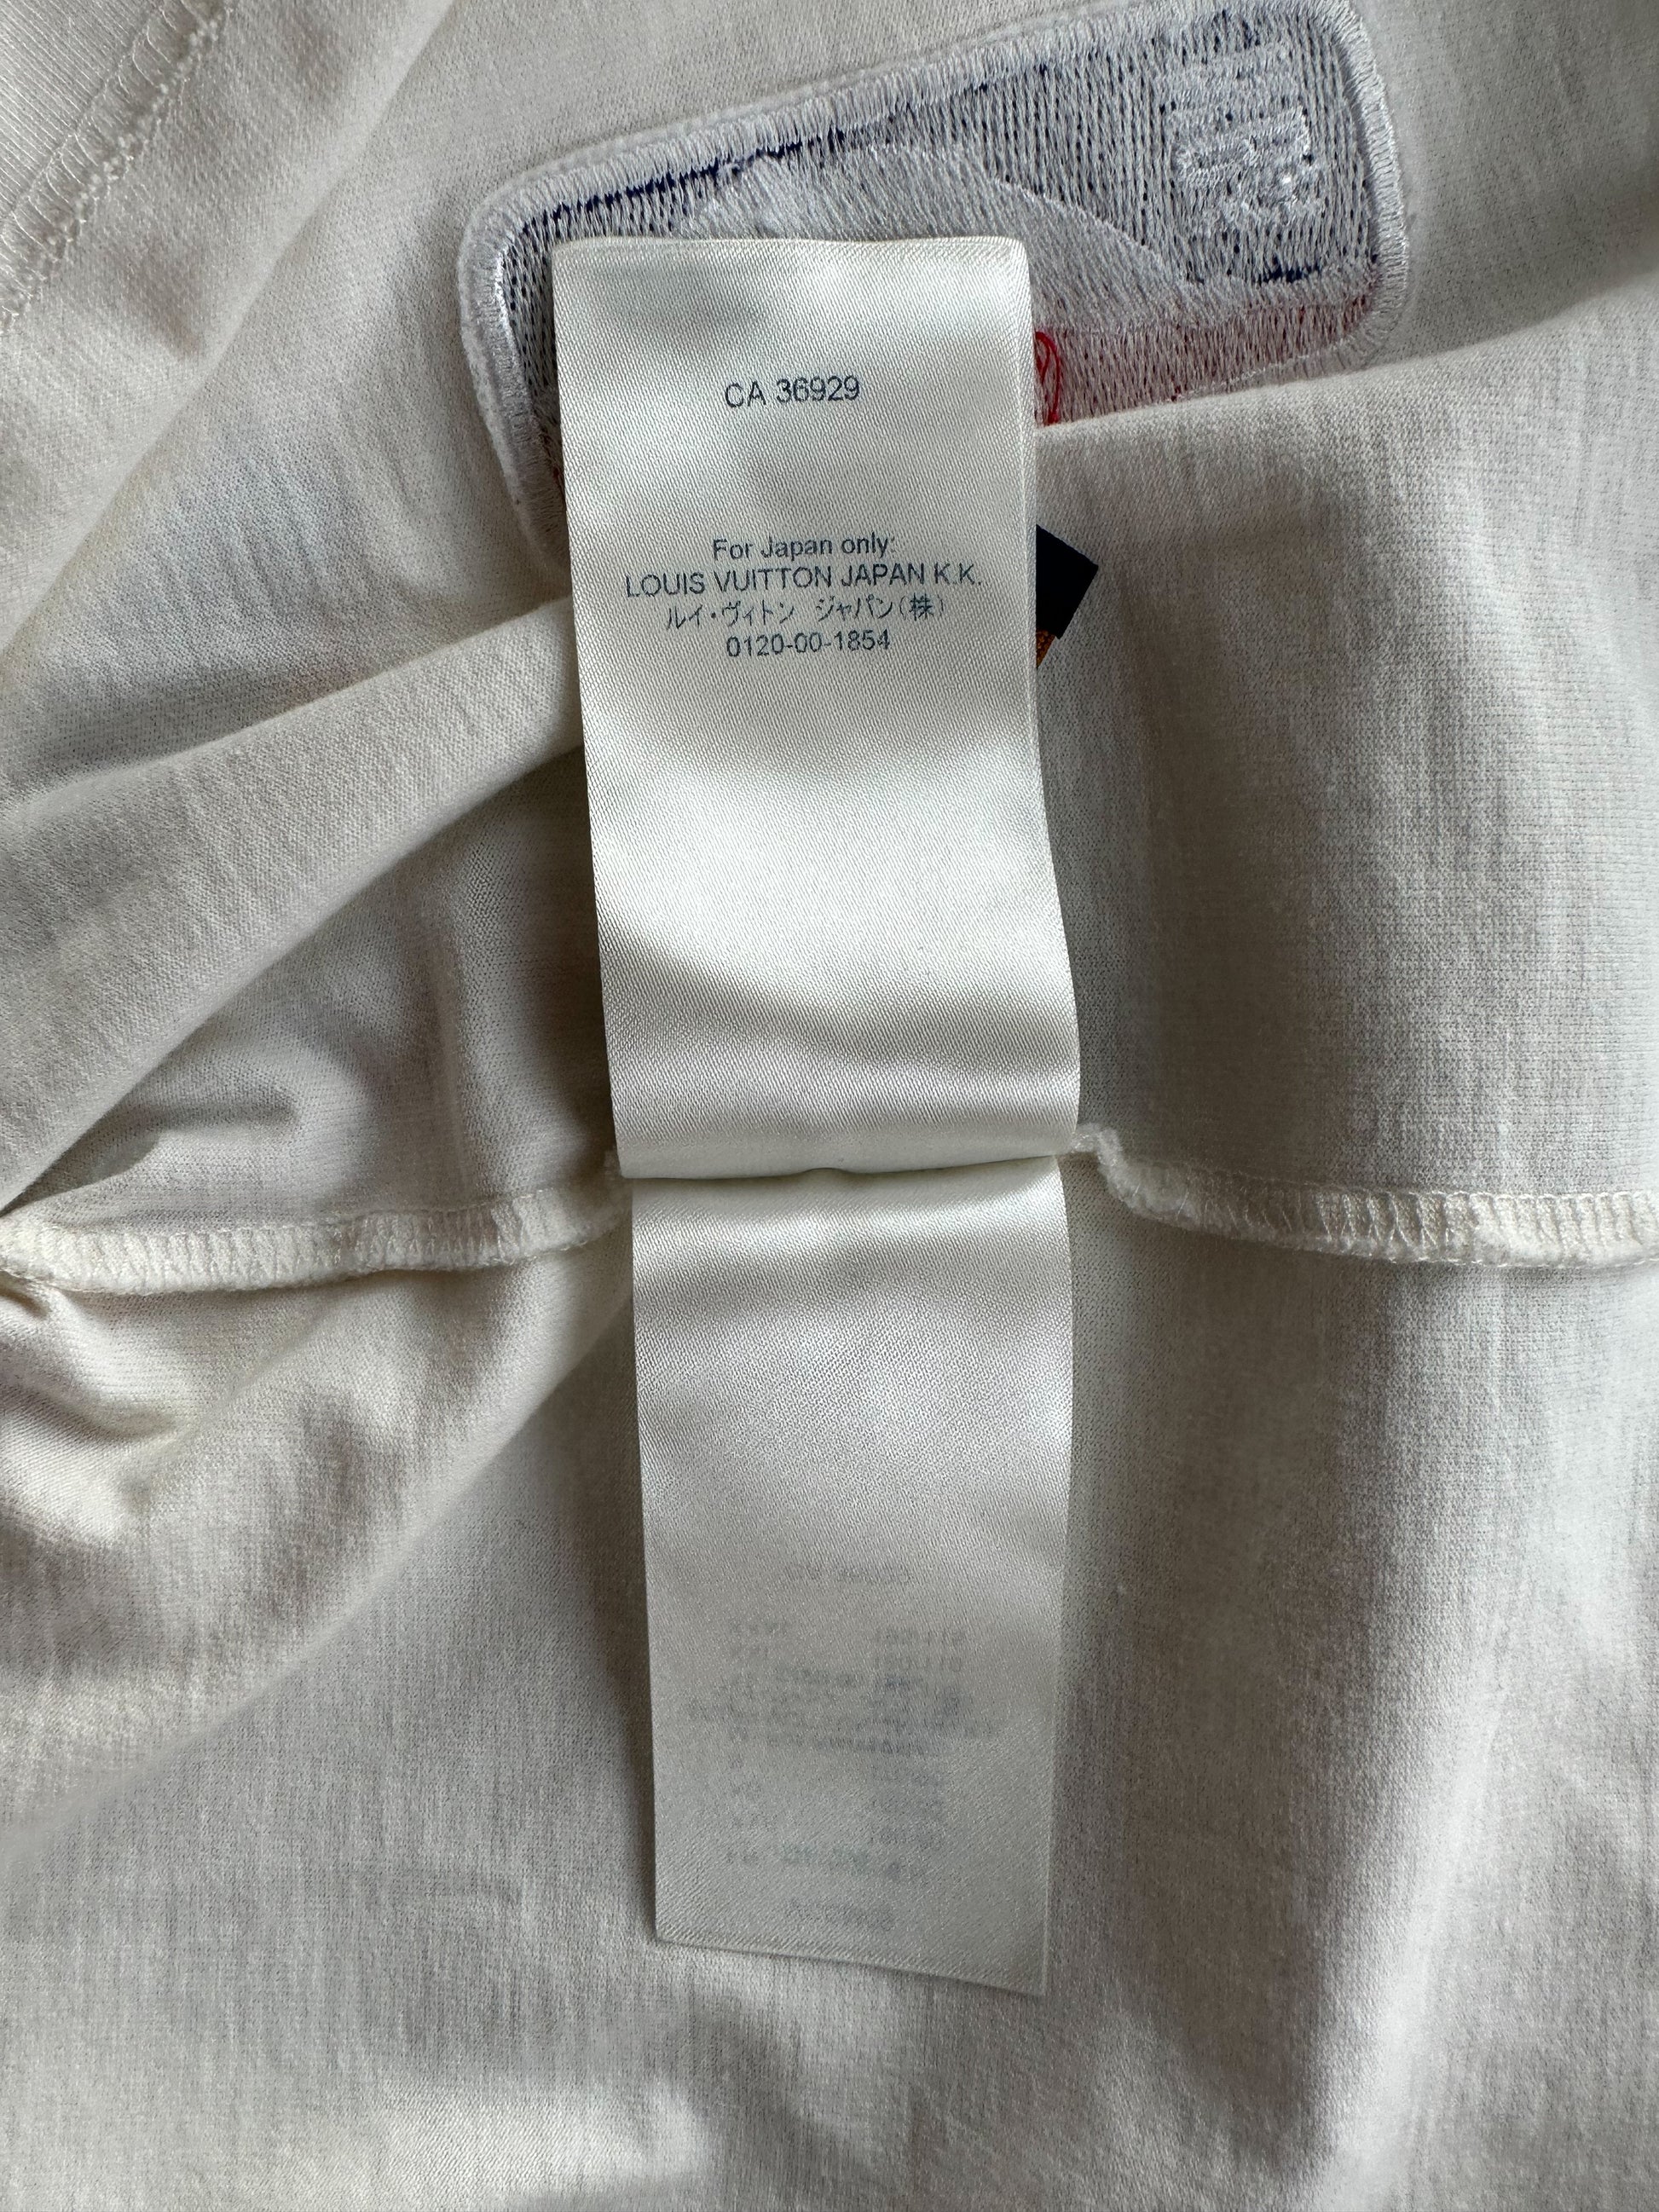 Authentic LOUIS VUITTON Gray Tshirt 0120-00-1854 Excellent Conditions